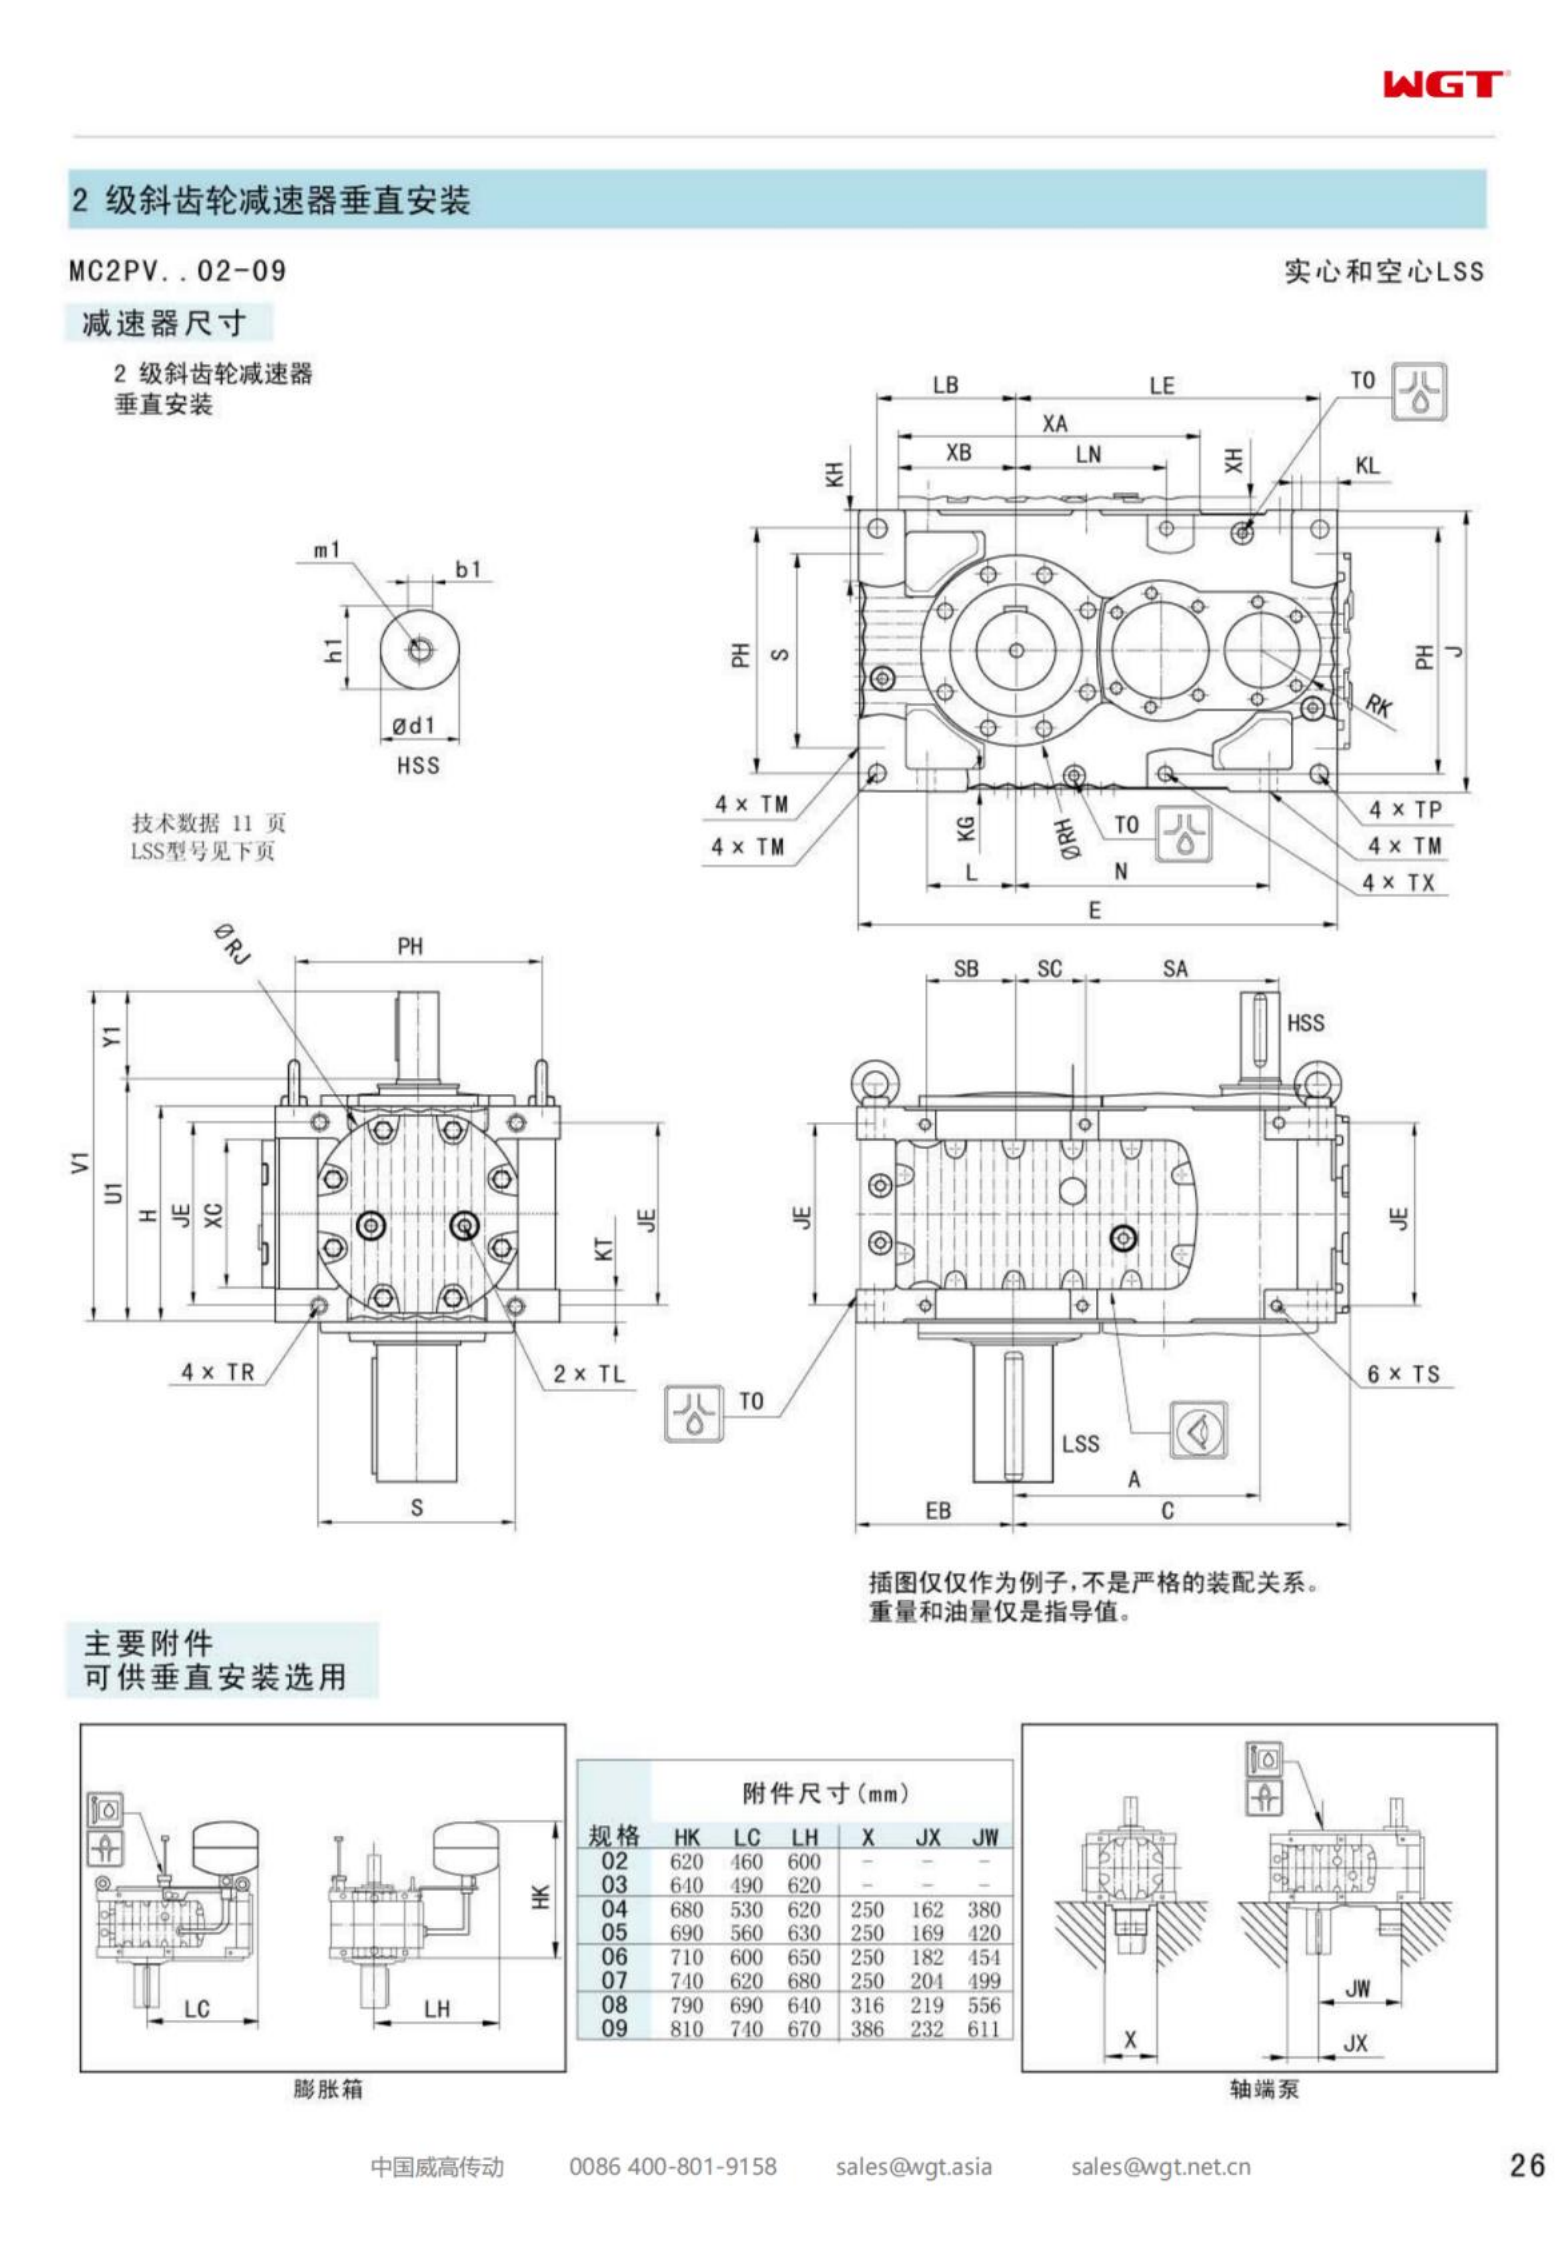 MC2PVST08 replaces _SEW_MC_Series gearbox (patent)